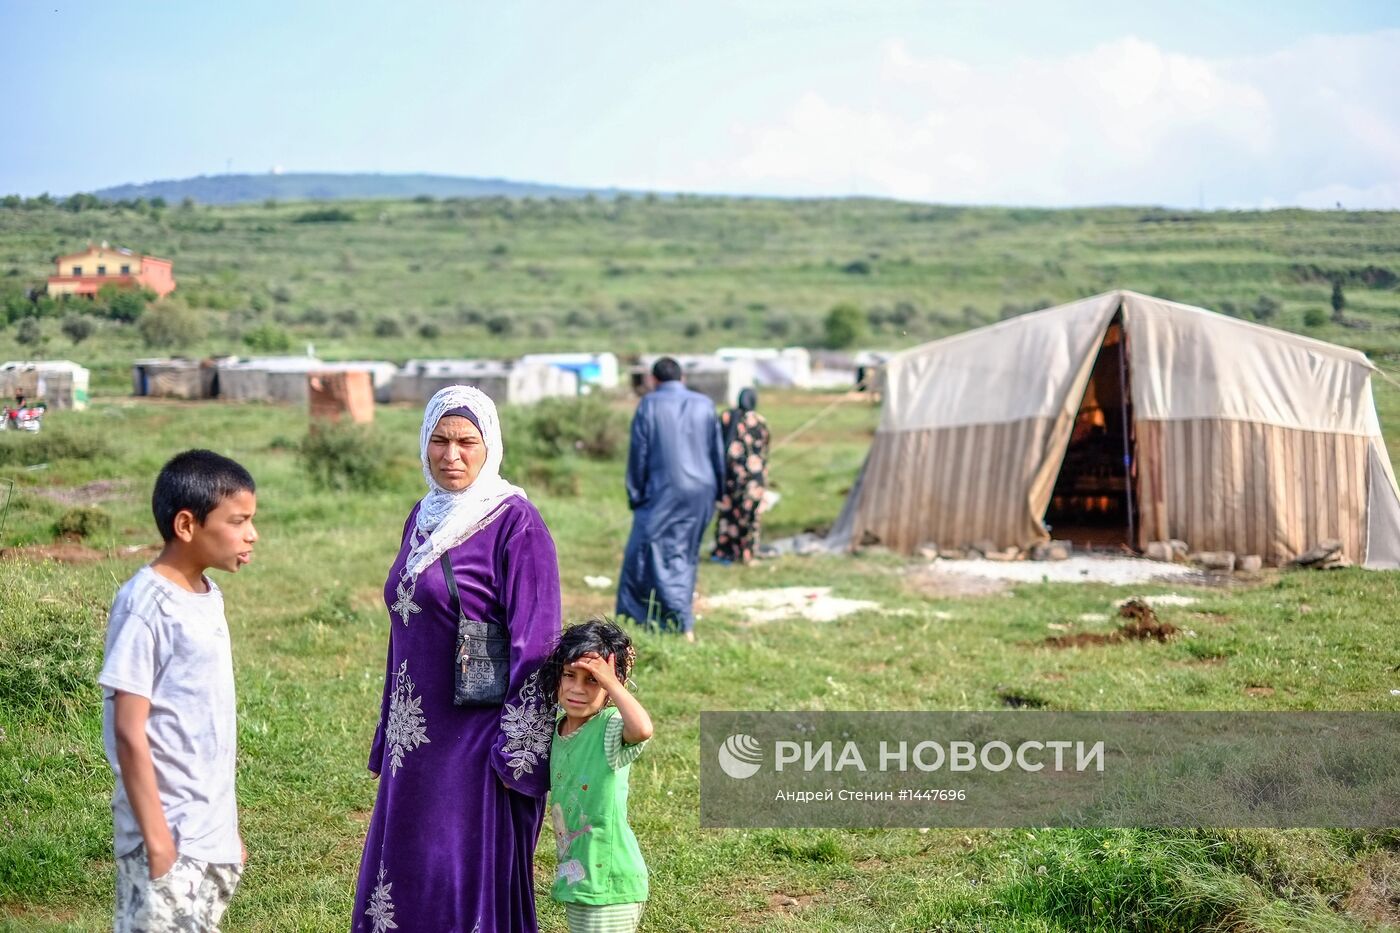 Сирийские беженцы в Ливане